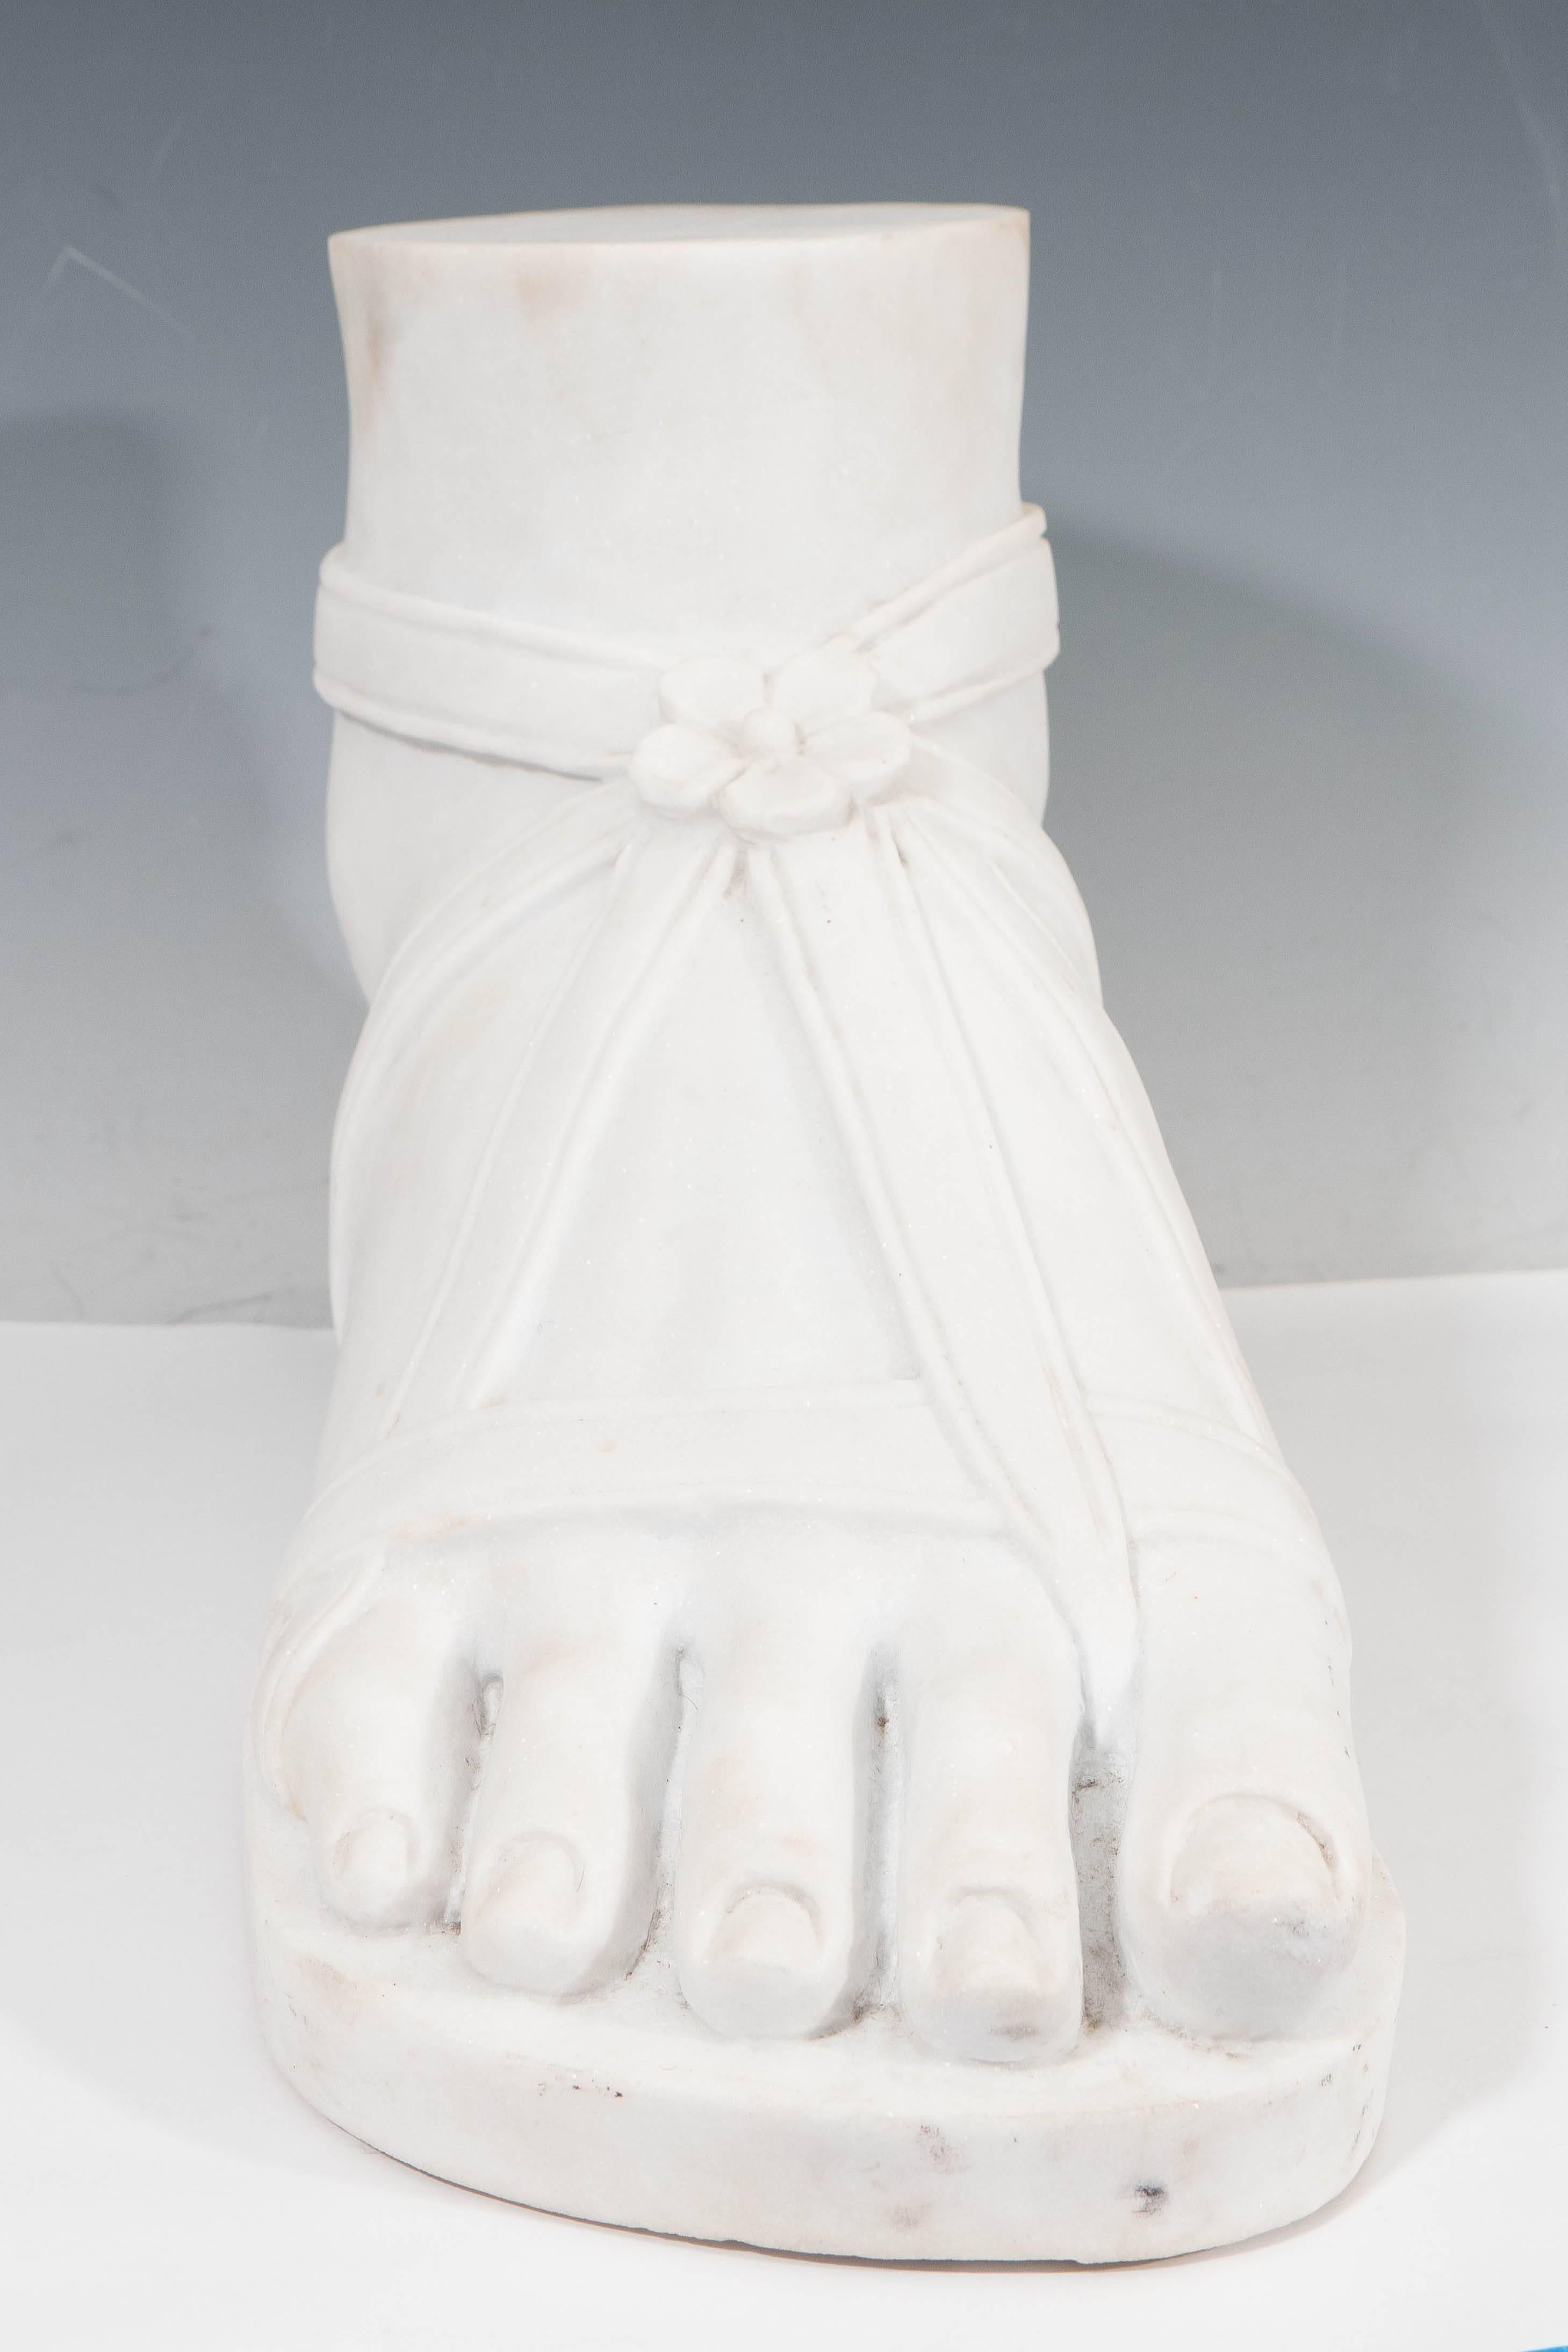 Carved Large Italian Marble ‘Roman Centurion’ Foot